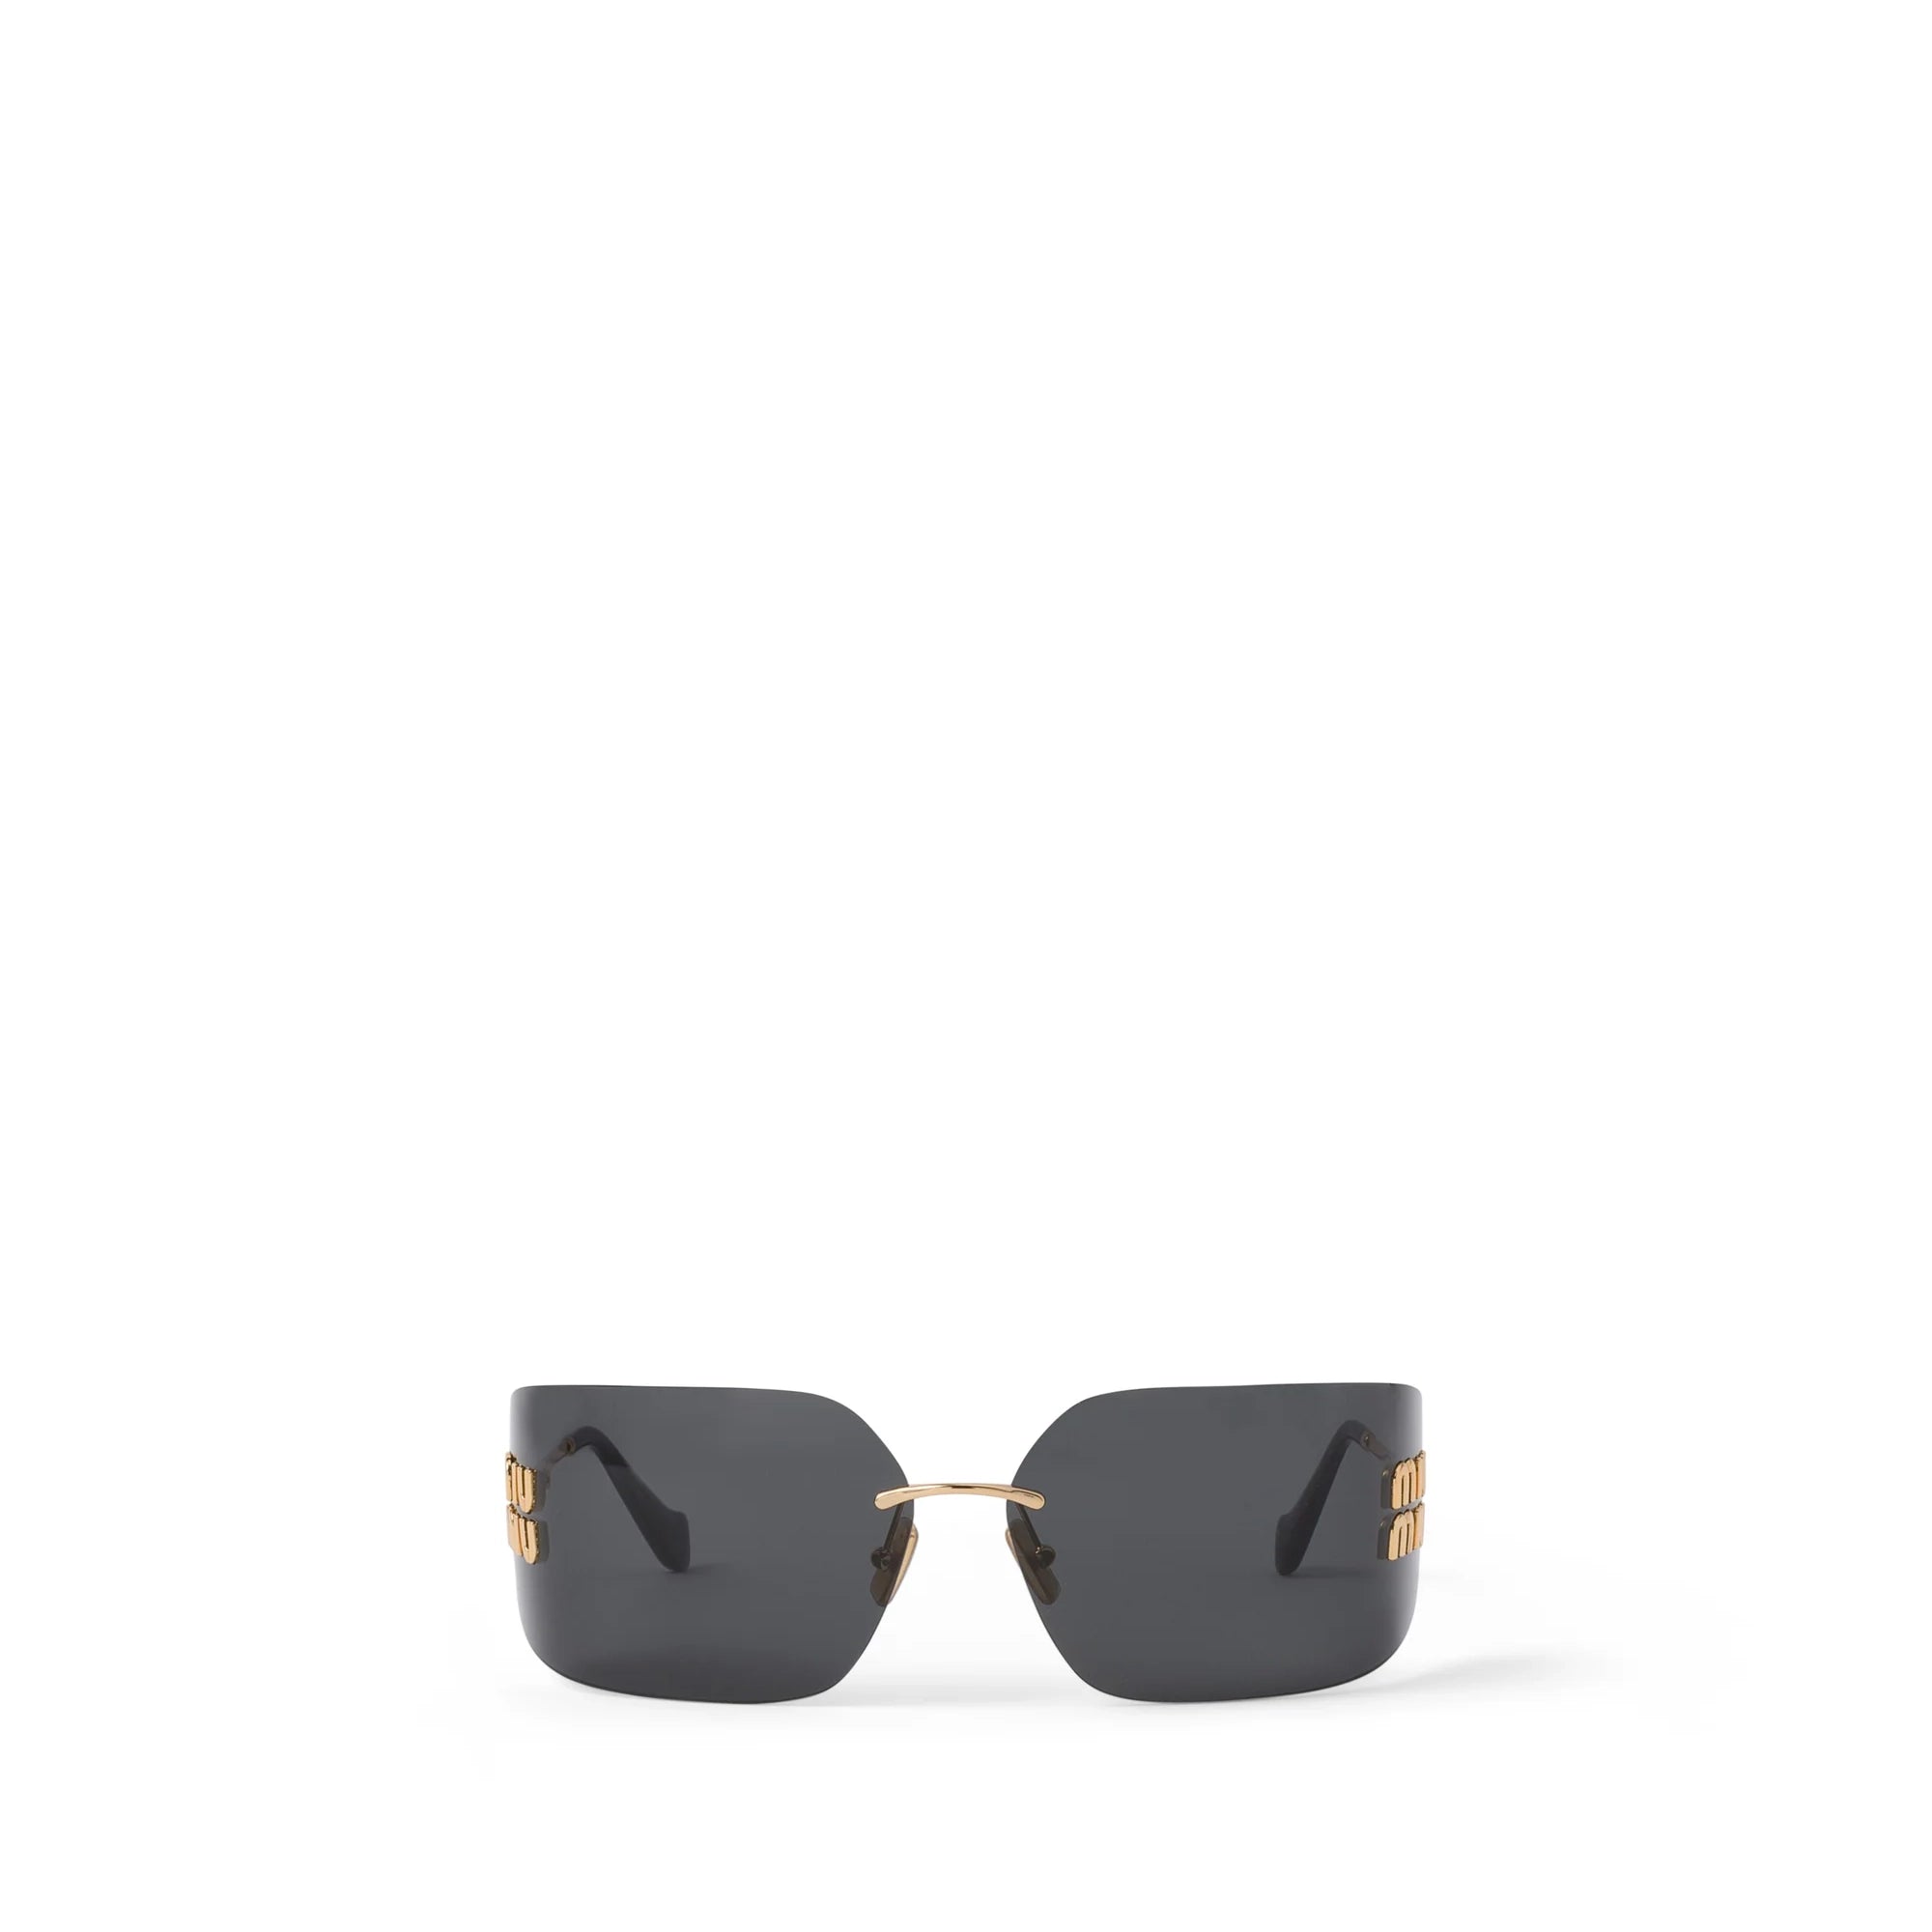 Miu Miu - Women’s Runway Sunglasses - (Slate Grey) view 1